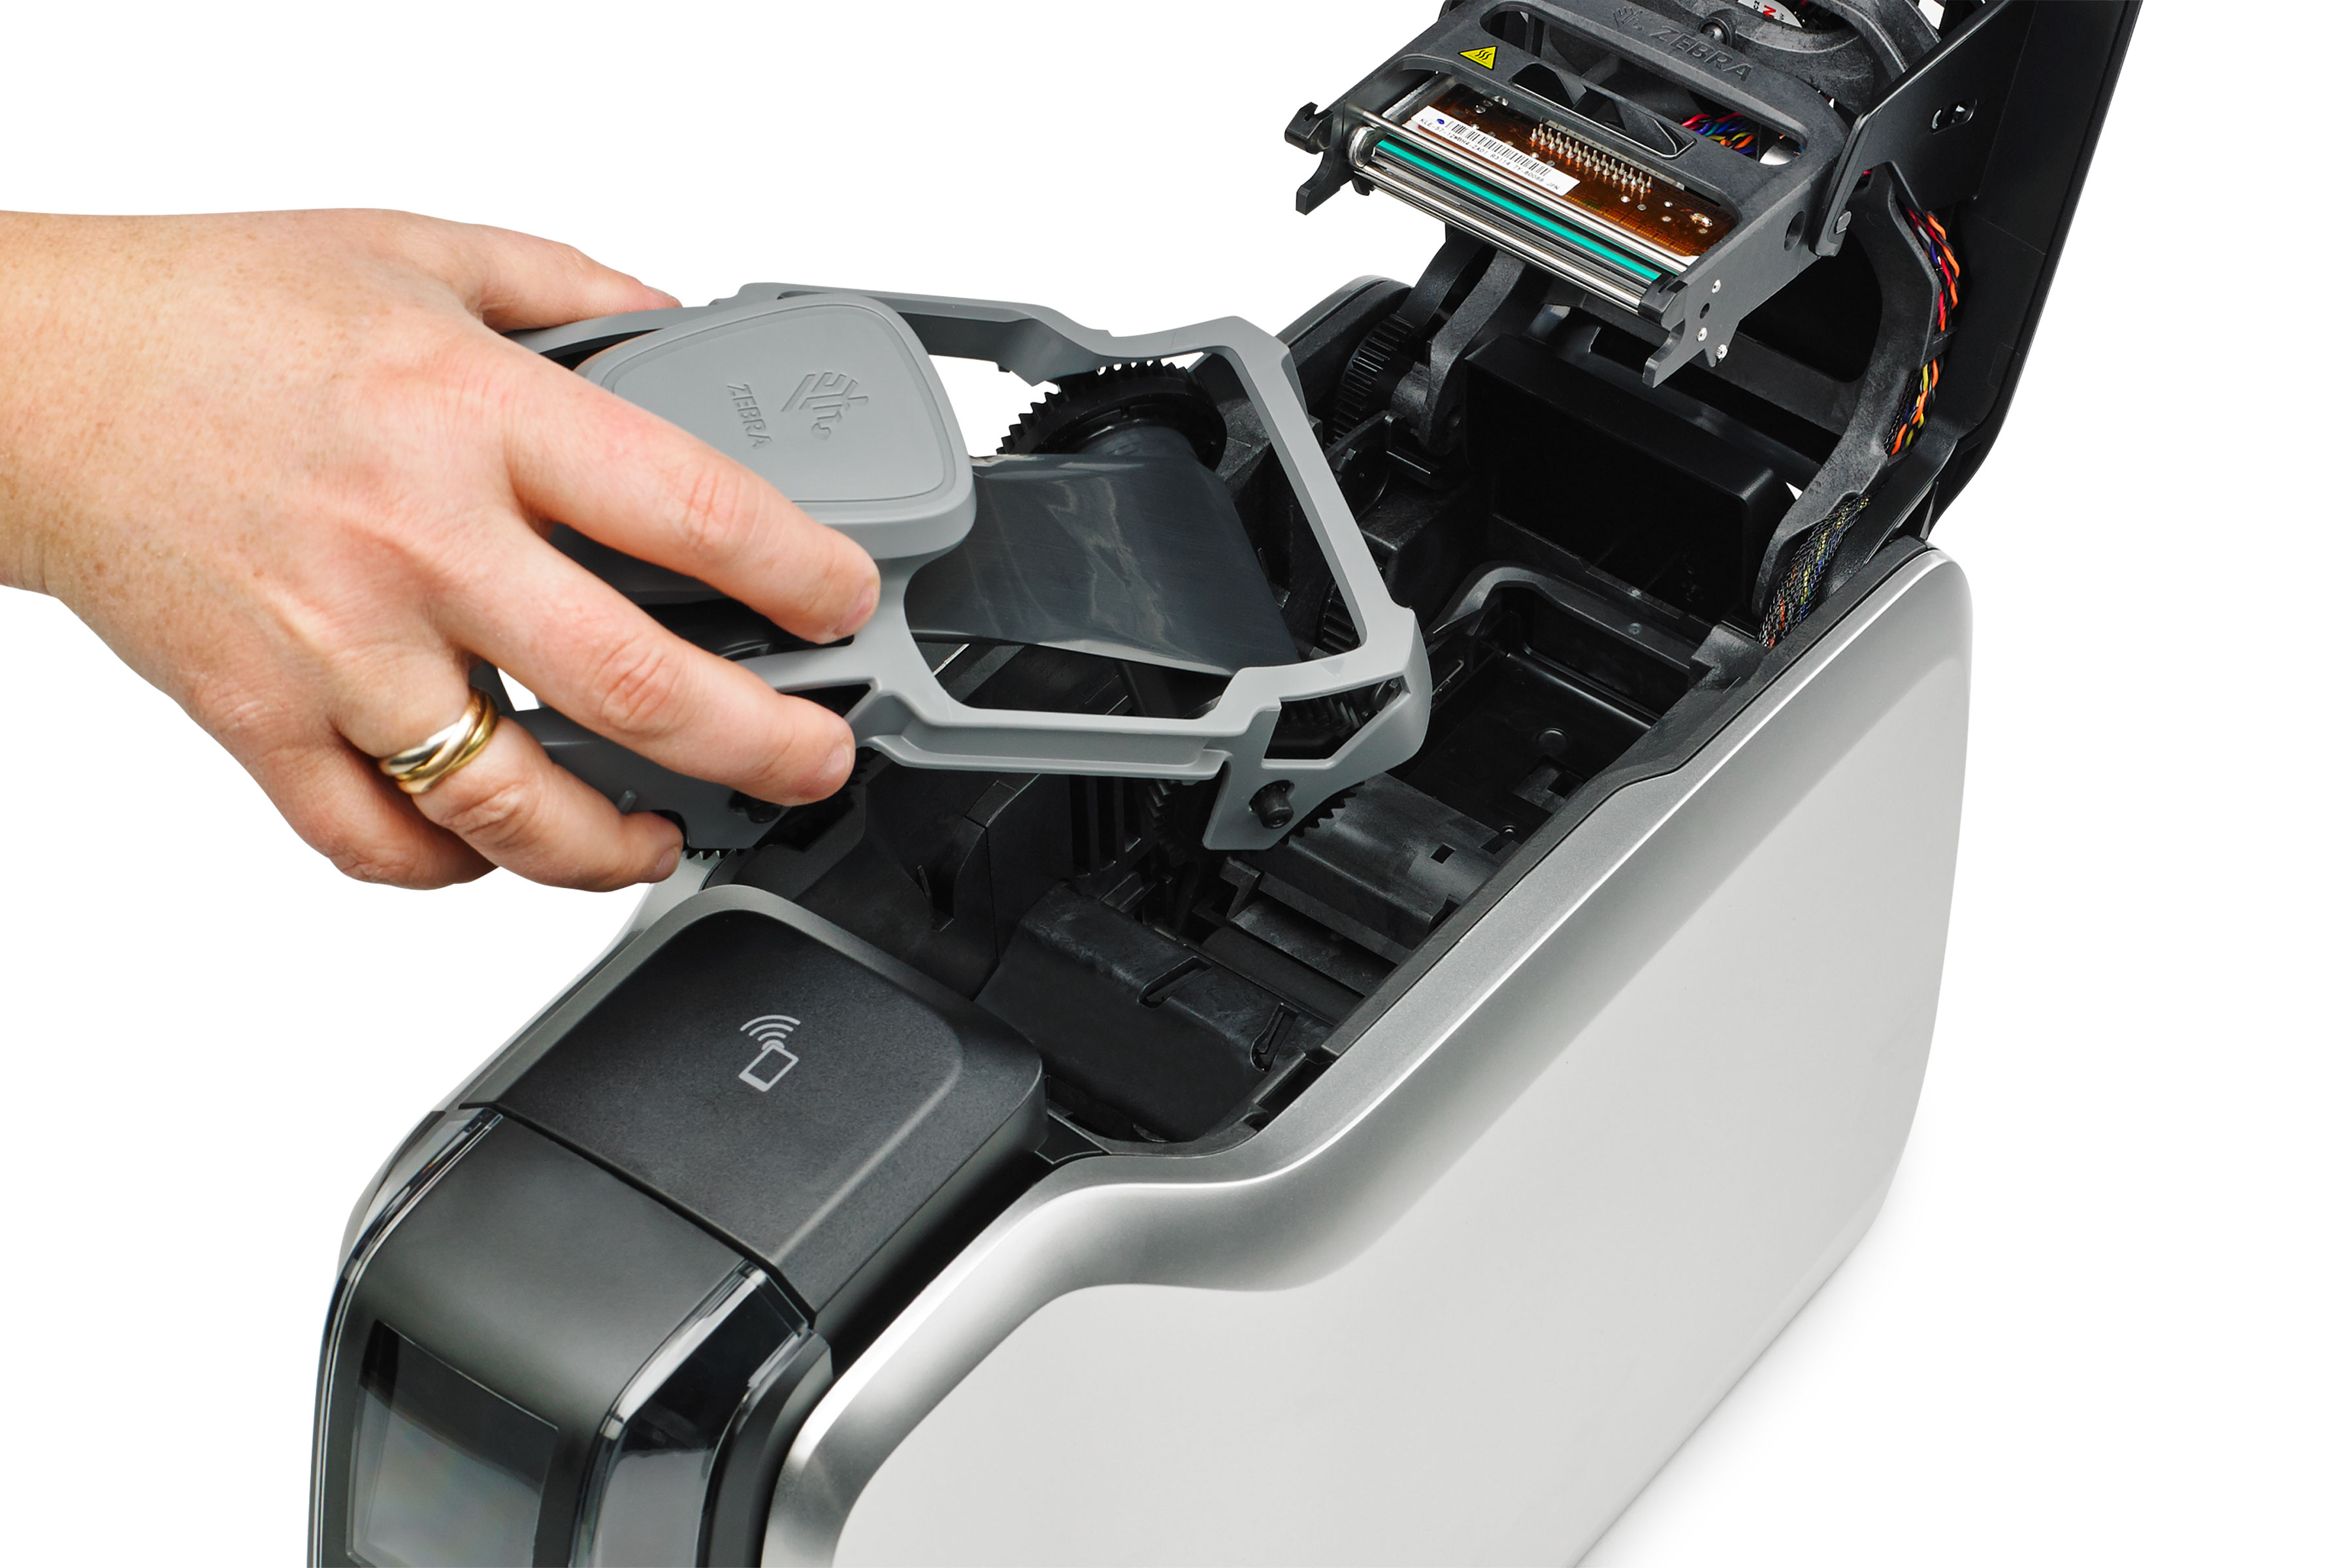 Color Card Printer Single Side Double-sided Print Card Making Machine  Special Job Permit Pvc Card Dye Sublimation Printer Zc300 - Printers -  AliExpress